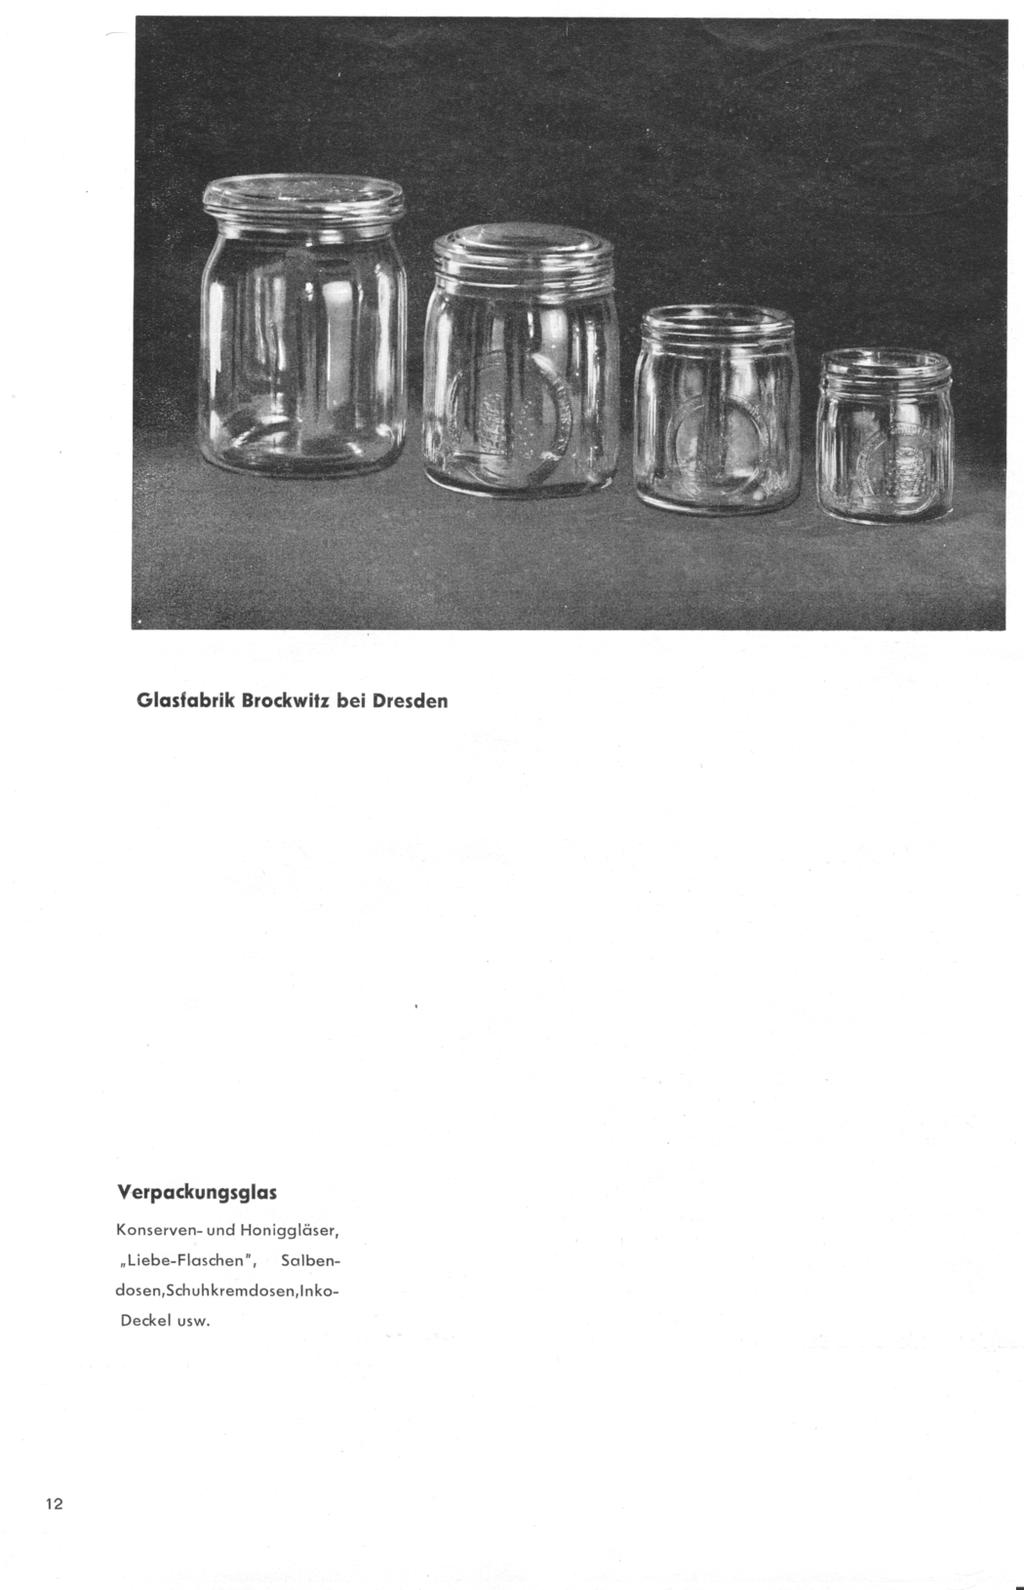 Abb. 2008-3-07/011 MB VVB Kamenz 1949, Seite 12, Glasfabrik Brockwitz